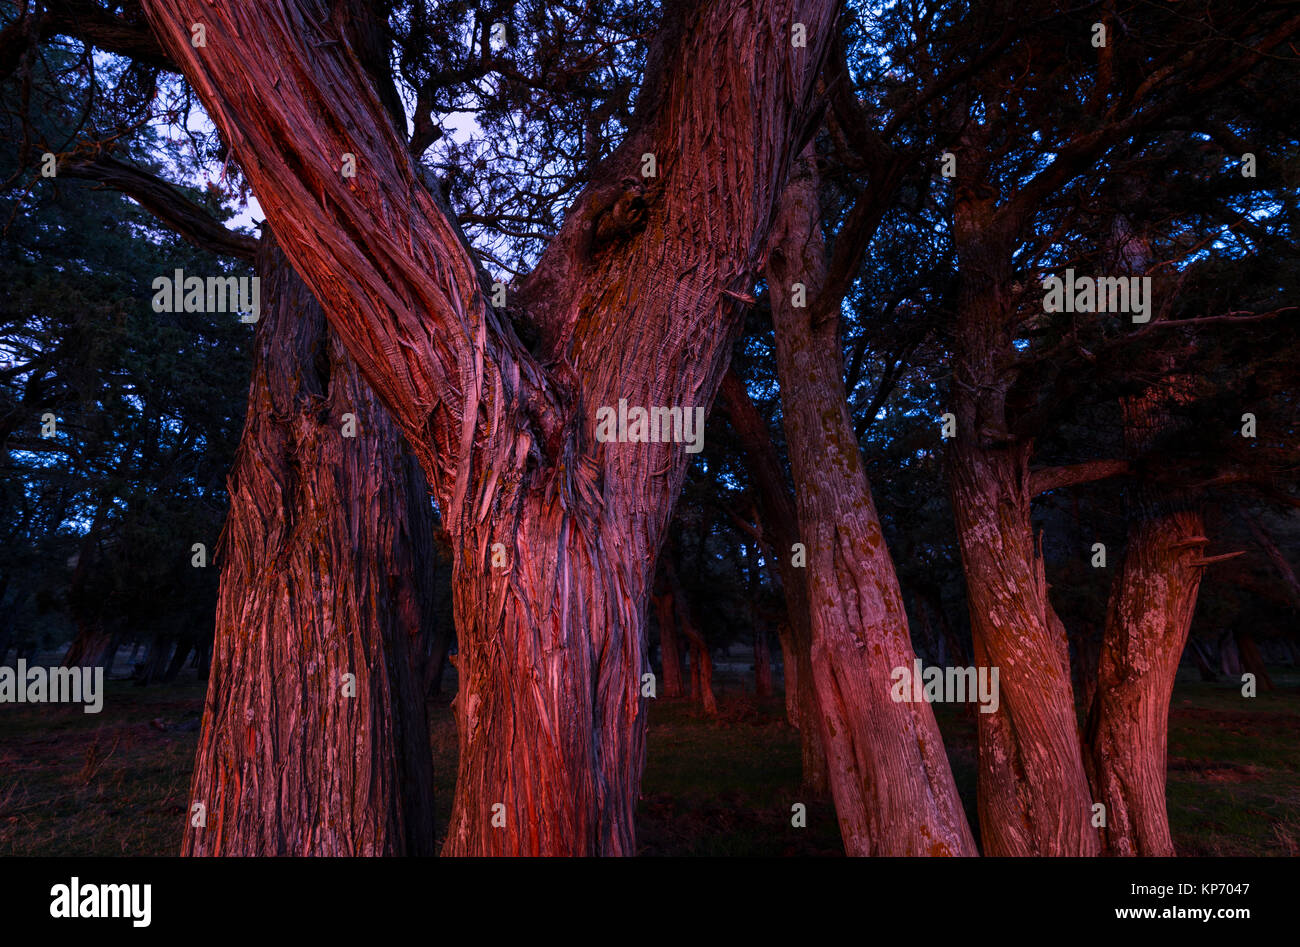 SABINA - SPANISH JUNIPER (Juniperus thurifera), Sabinar de Calatañazor, Soria province, Castilla y Leon, Spain, Europe Stock Photo